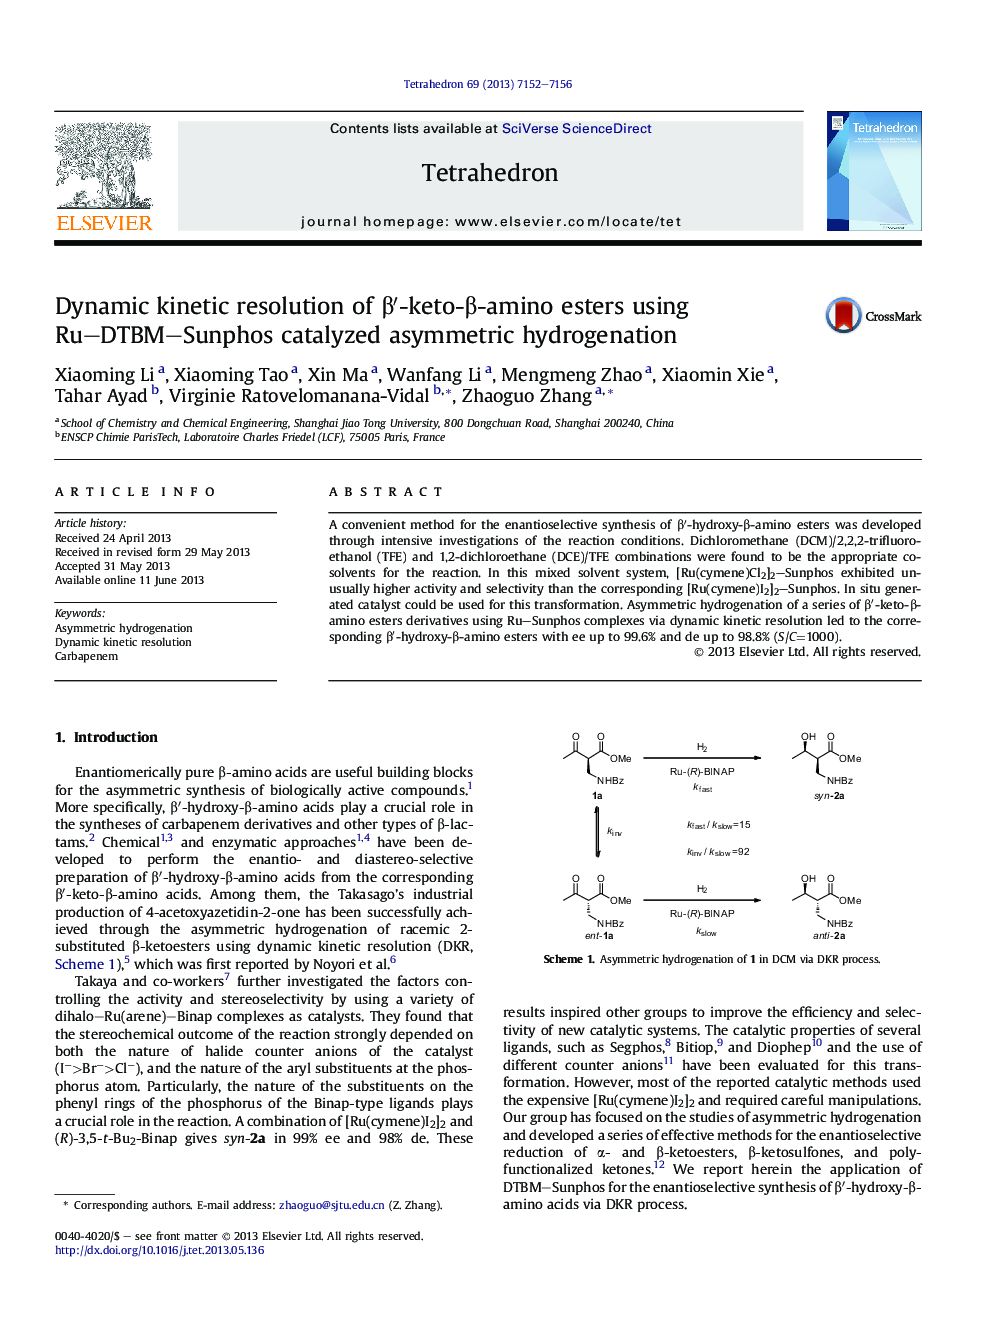 Dynamic kinetic resolution of Î²â²-keto-Î²-amino esters using Ru-DTBM-Sunphos catalyzed asymmetric hydrogenation